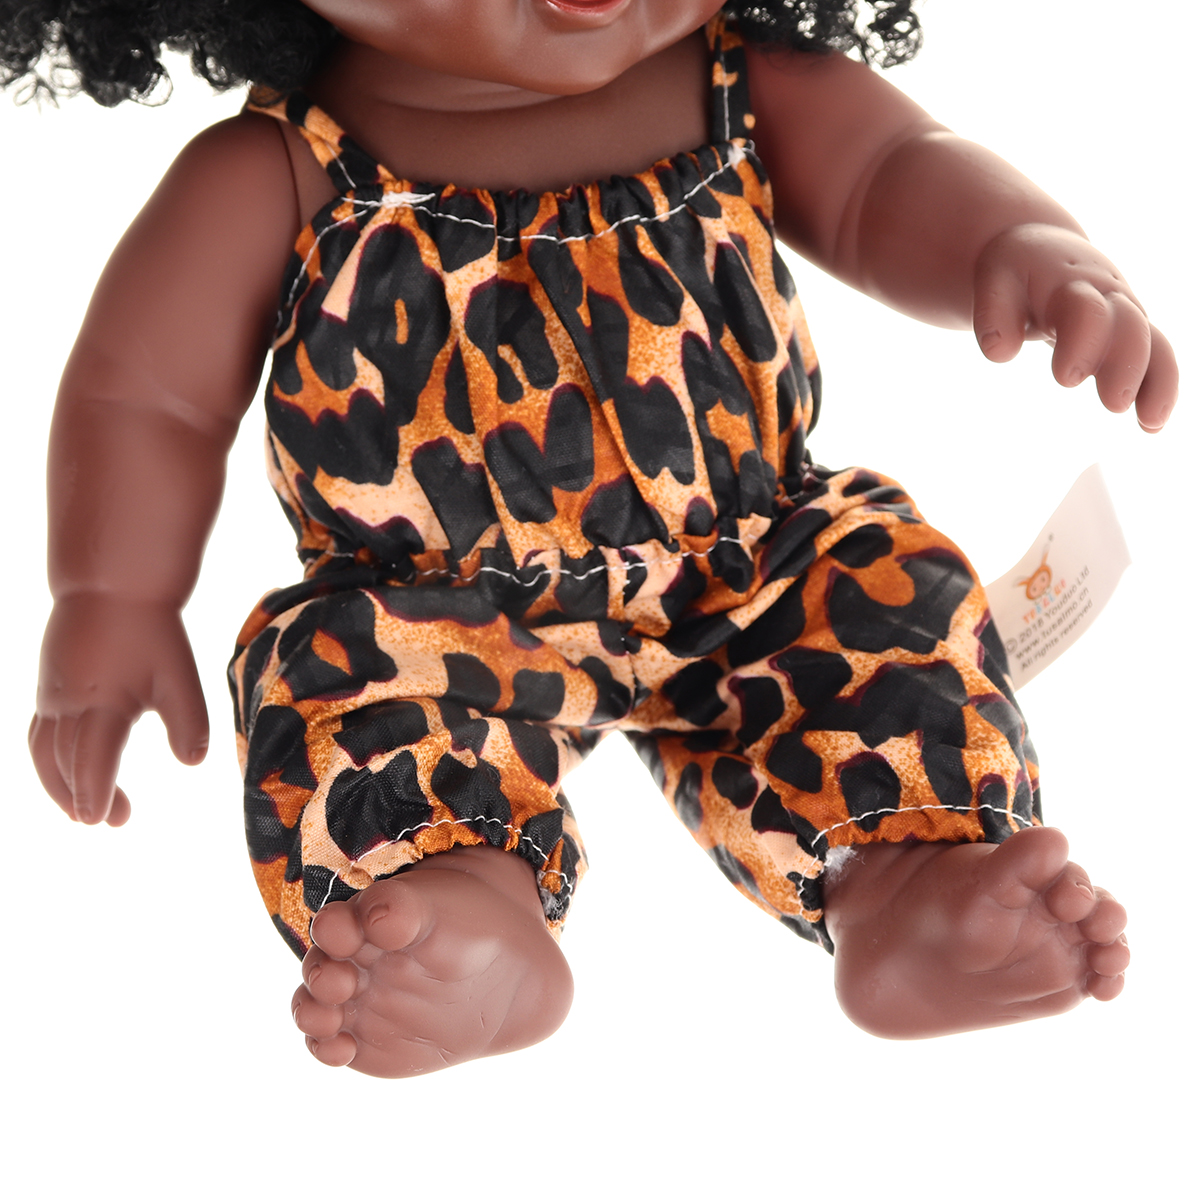 12Inch-Simulation-Soft-Silicone-Vinyl-PVC-Black-Baby-Fashion-Doll-Rotate-360deg-African-Girl-Perfect-1734367-7